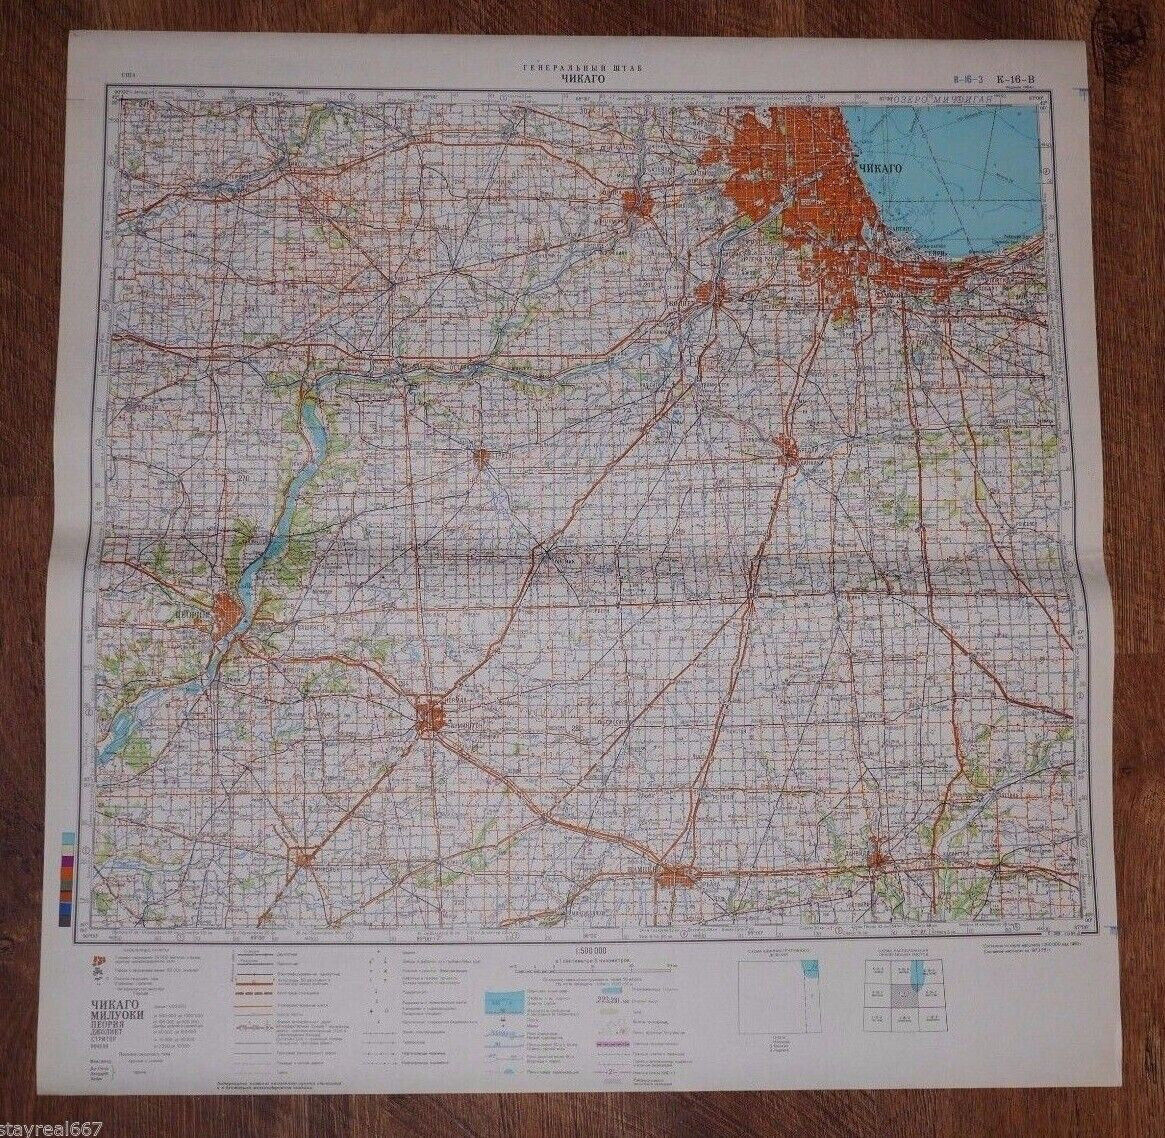 Authentic Soviet Army Military Topographic Map Chicago, Peoria, Illinois USA